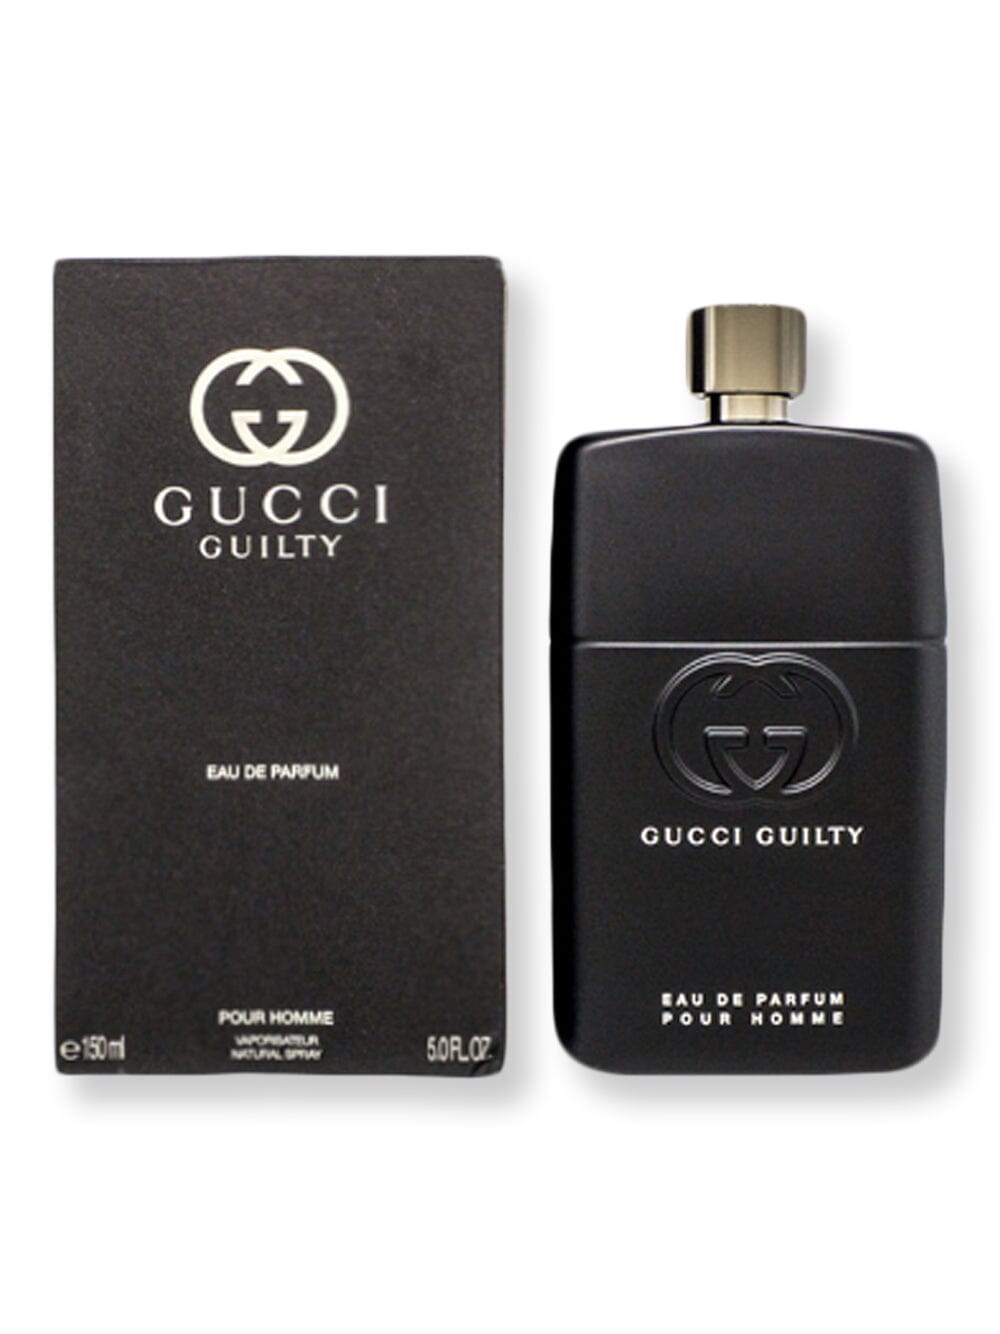 Gucci Gucci Gucci Guilty Pour Homme EDP Spray 5 oz150 ml Perfume 